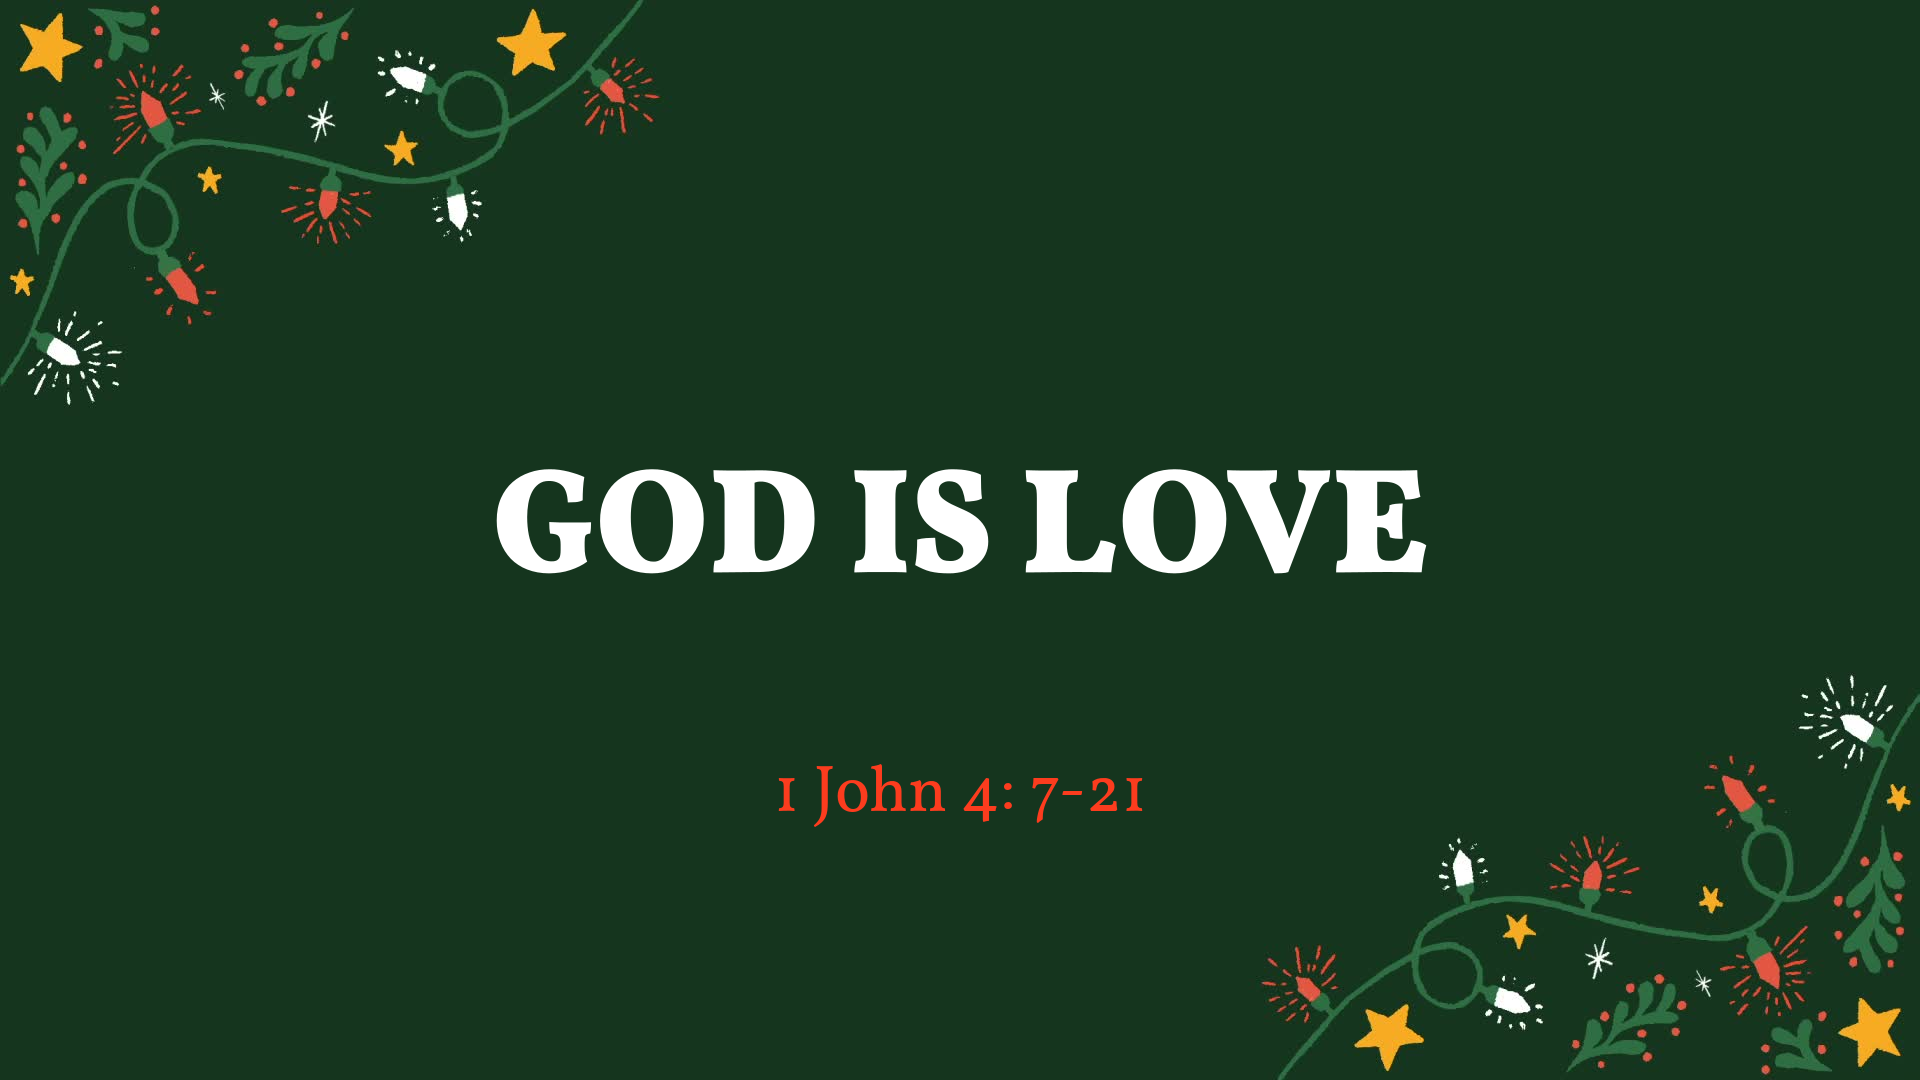 Dec 18, 2022 - God Is Love (Video) - 1 John 4: 7-21